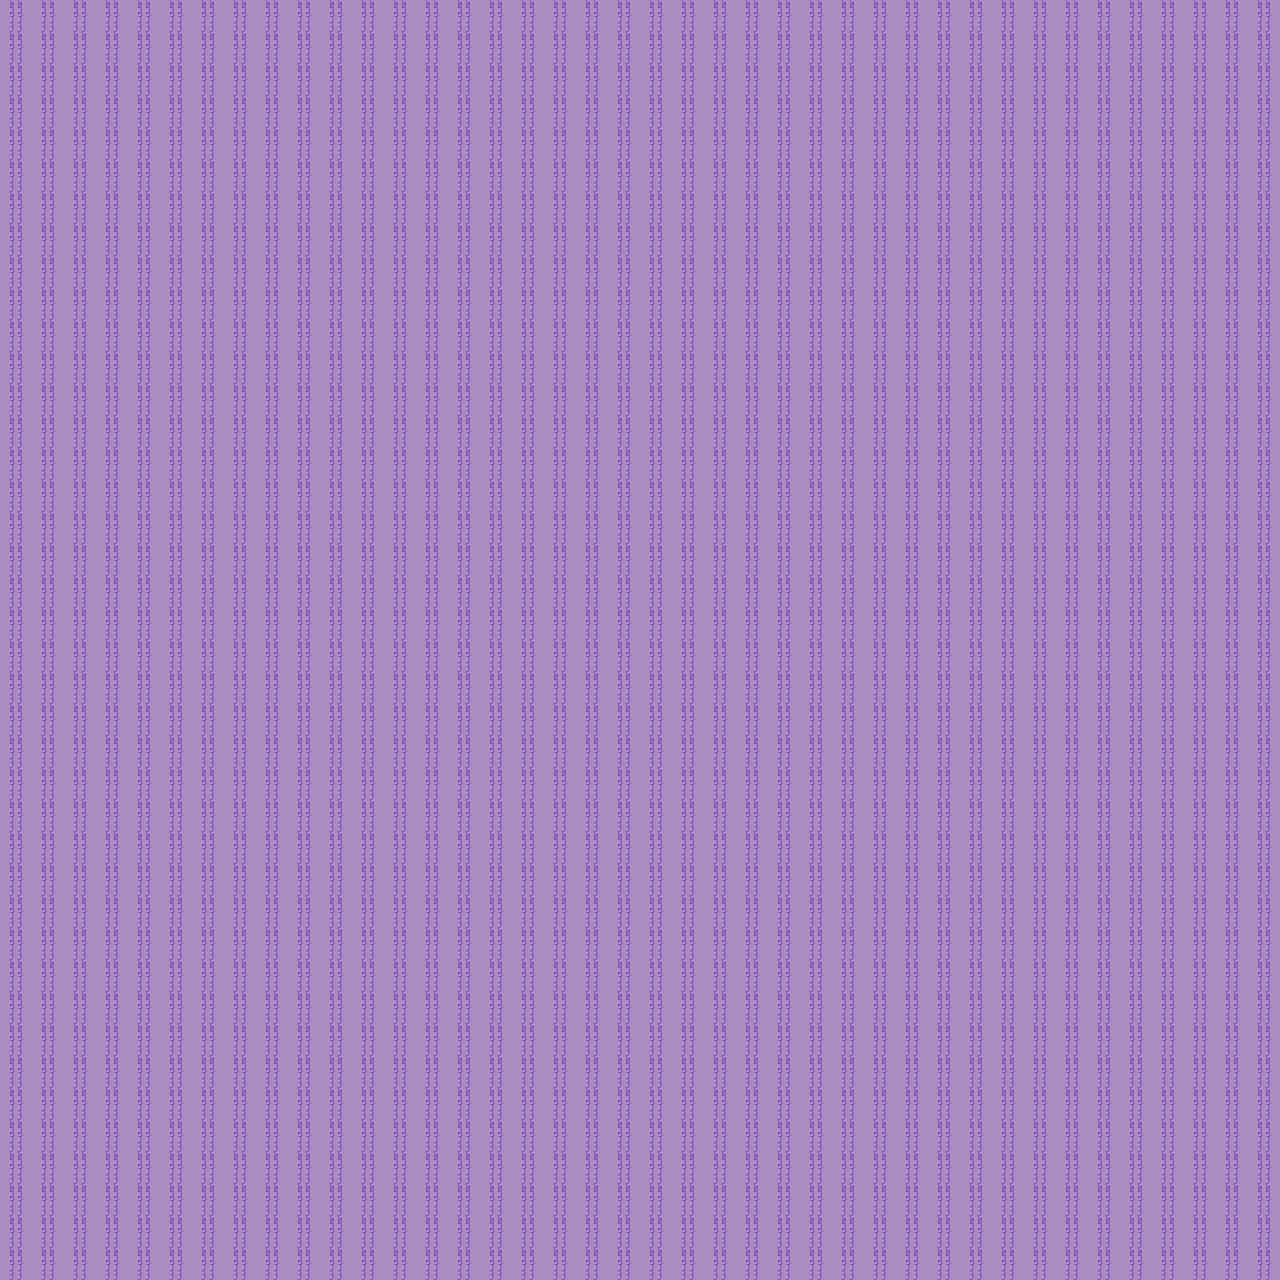 paper lines violet free photo